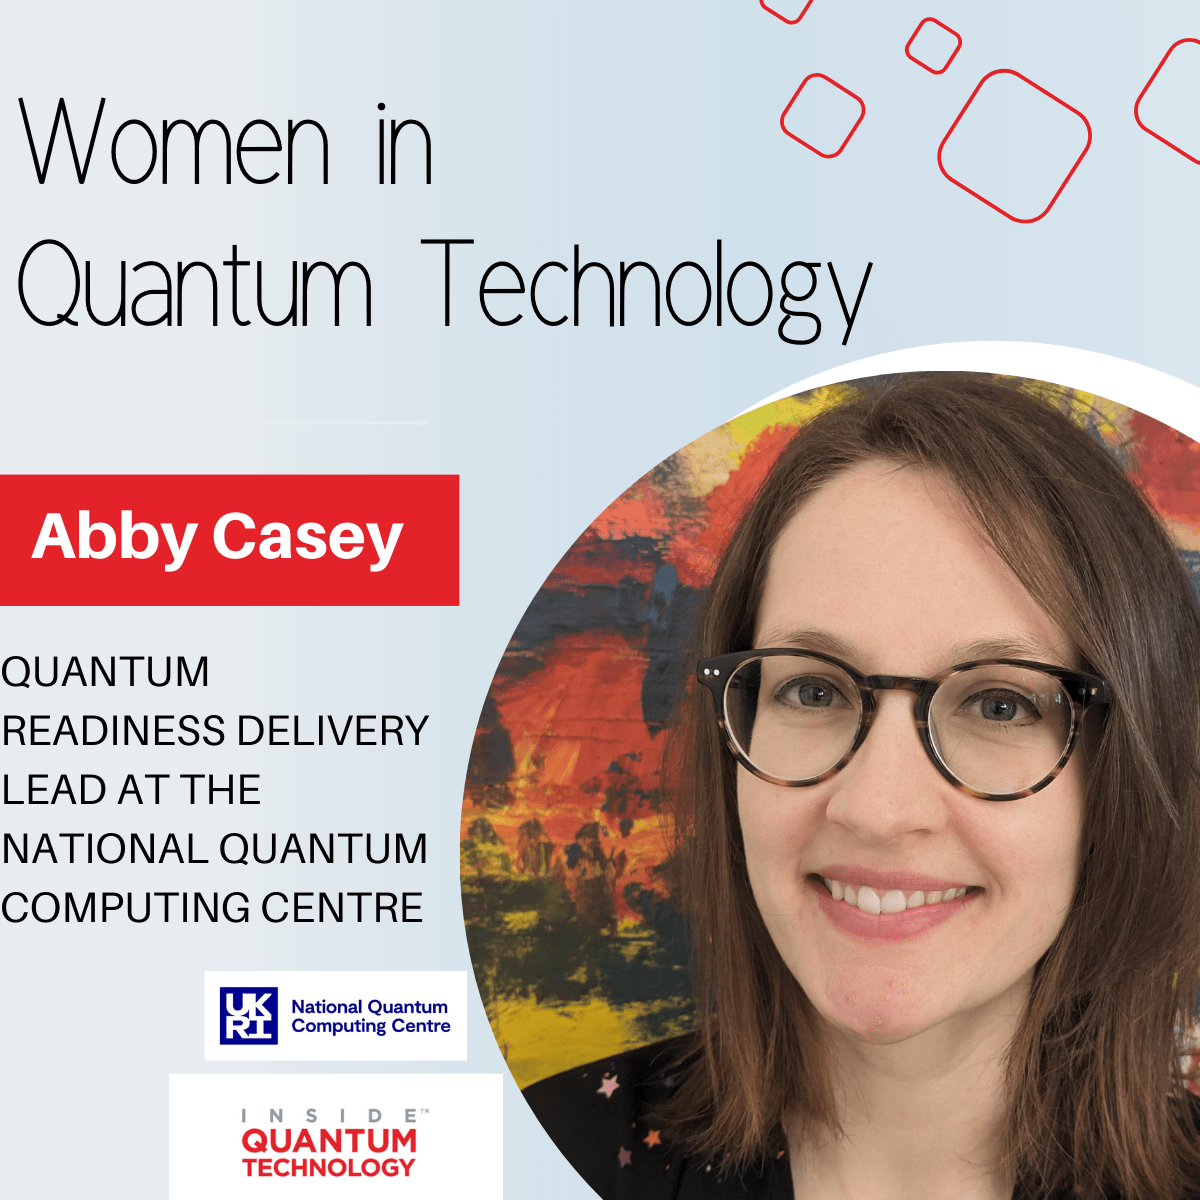 Donne della tecnologia quantistica: Abby Casey del National Quantum Computing Center (NQCC) - Inside Quantum Technology